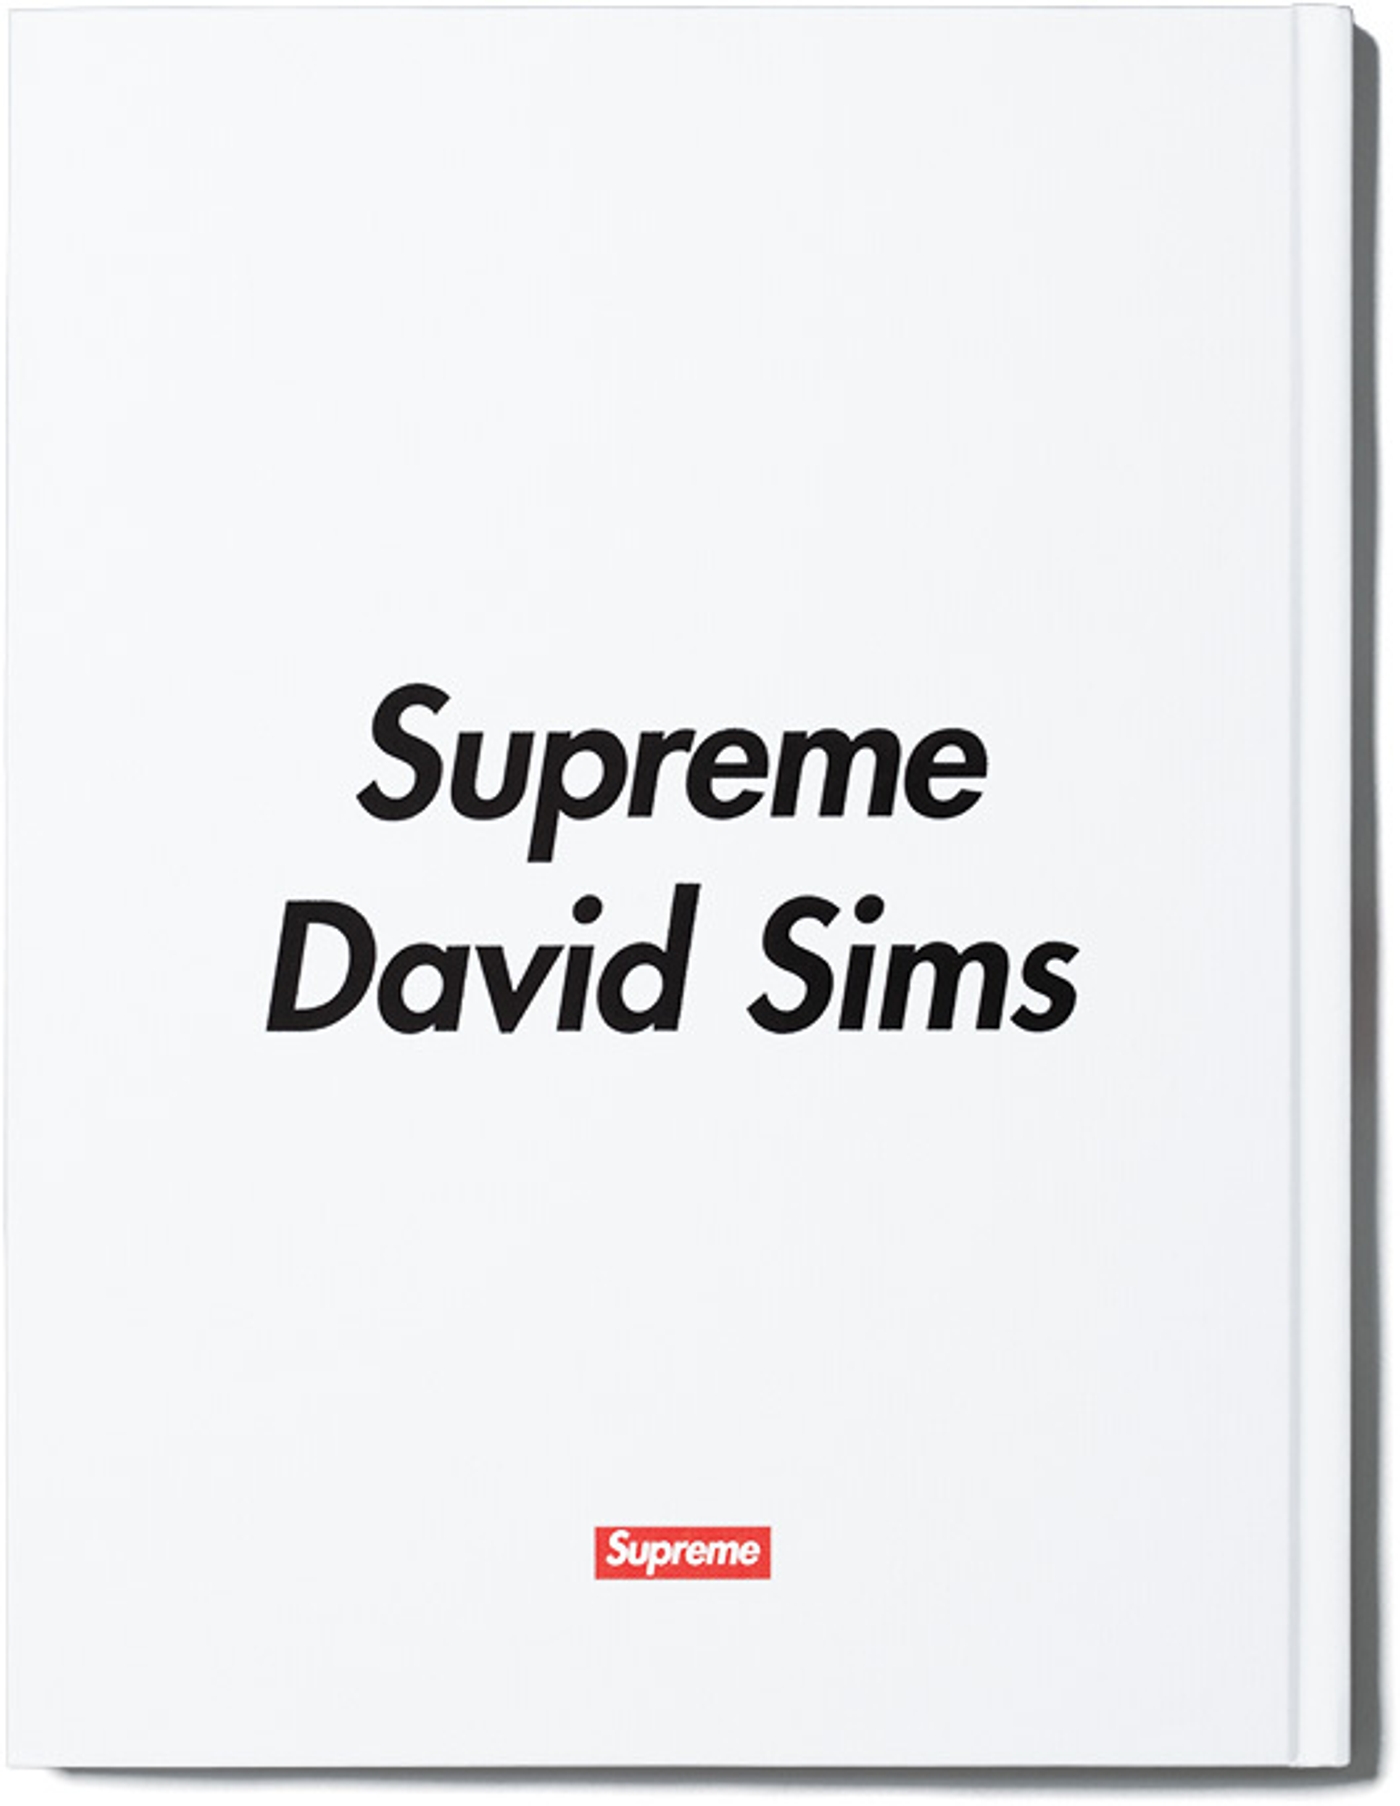 David Sims for Supreme (6) (6/6)